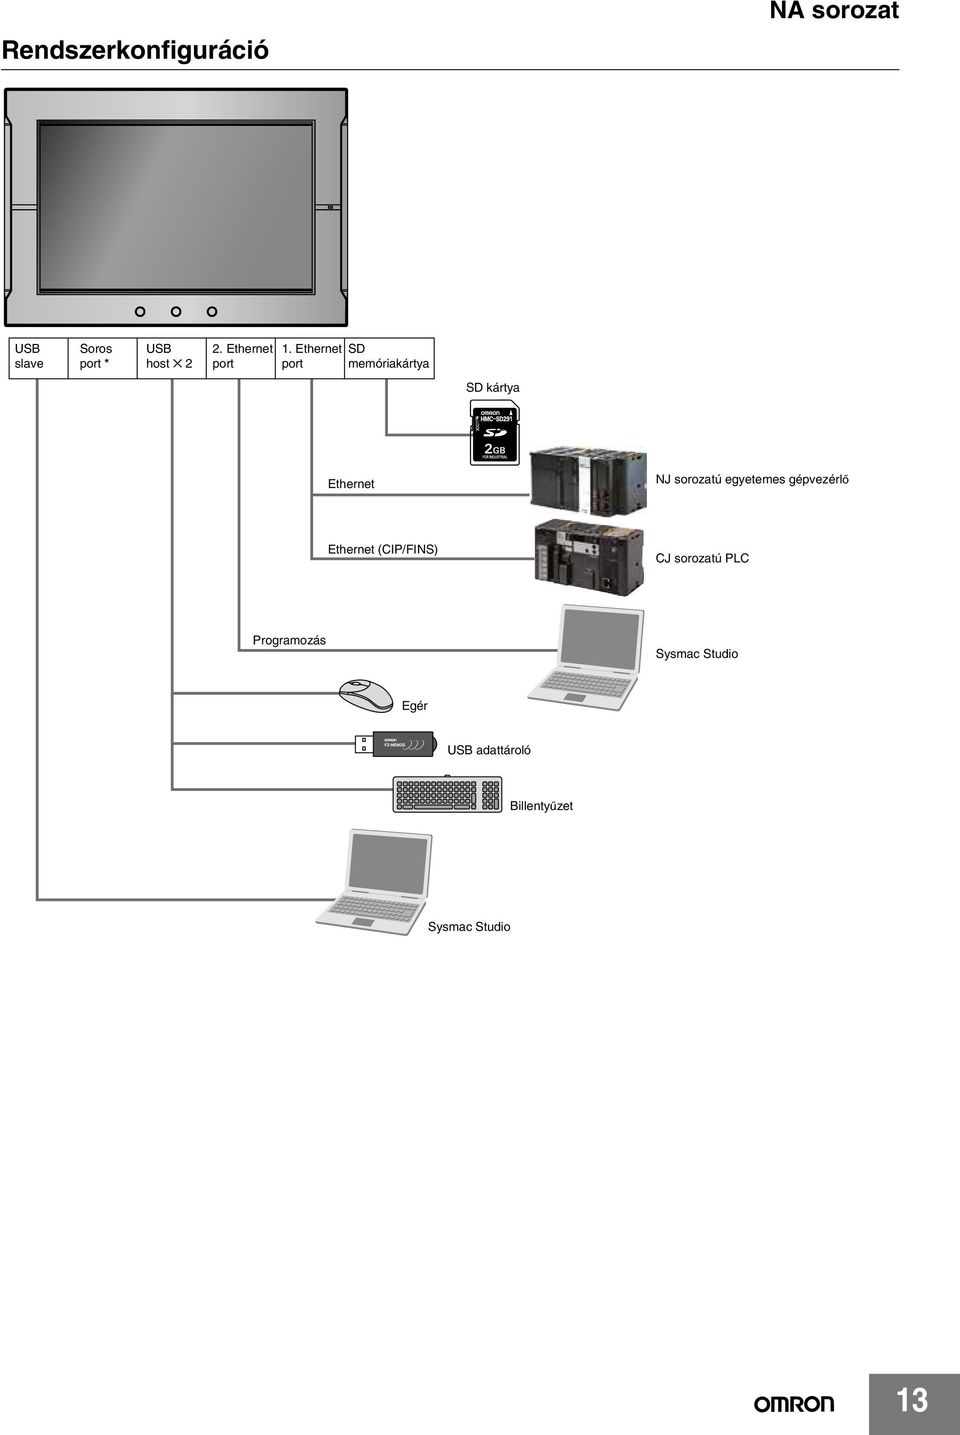 Ethernet port SD memóriakártya SD kártya Ethernet NJ sorozatú